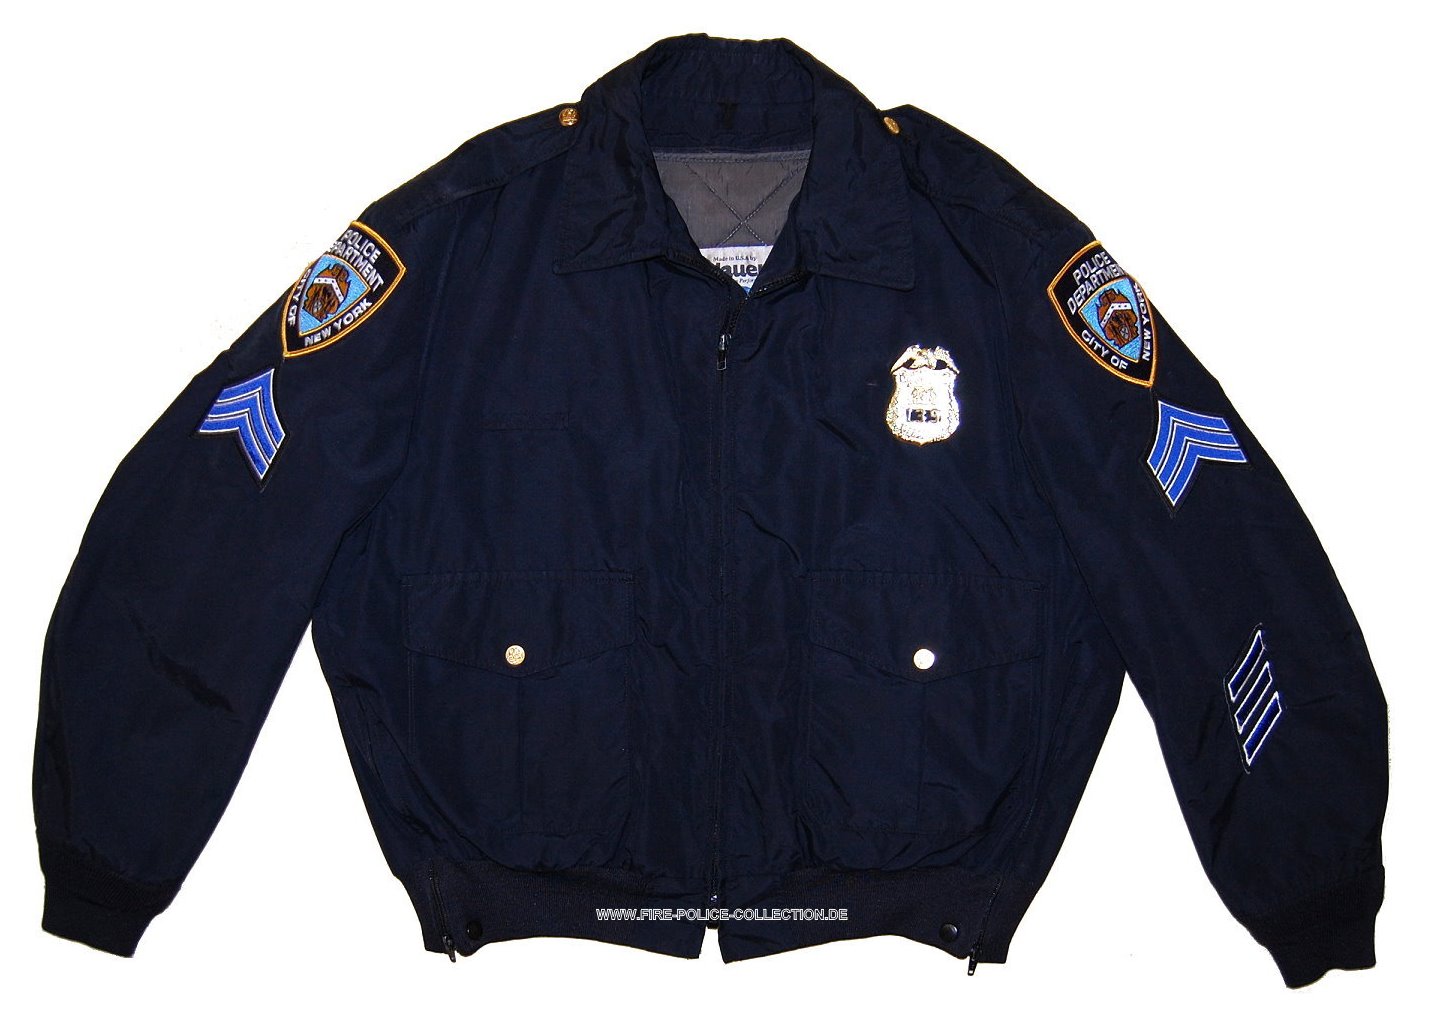 NYPD Sergeant Duty Jacket